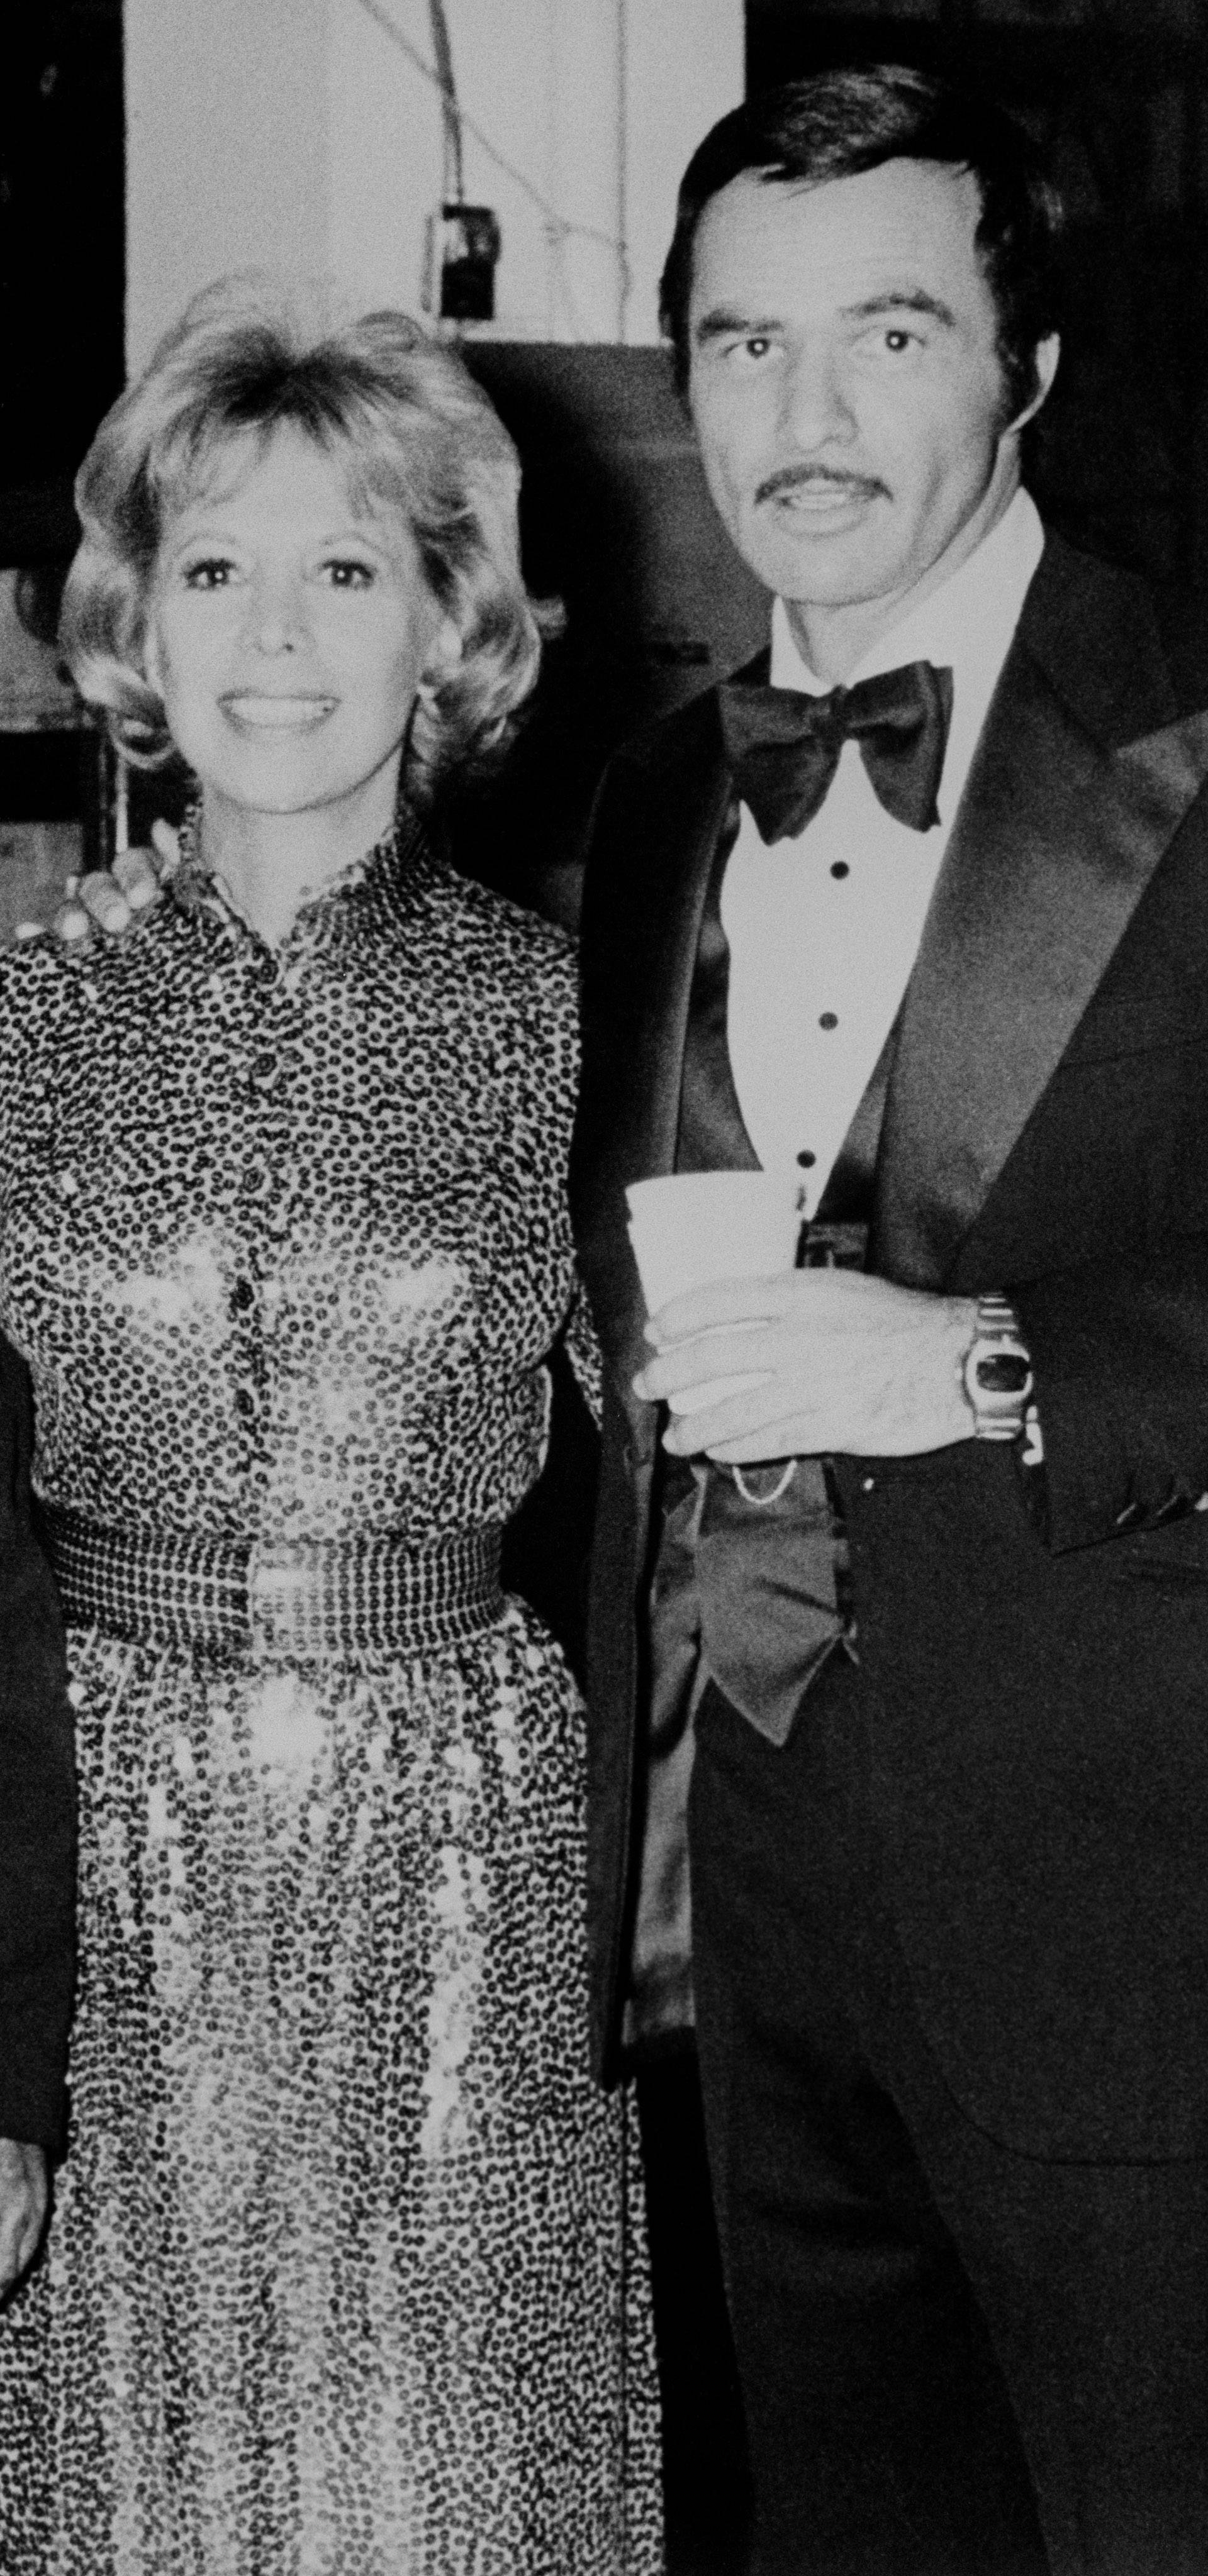 Entertainment - Celebrity Couples - Burt Reynolds and Dinah Shore - 1972